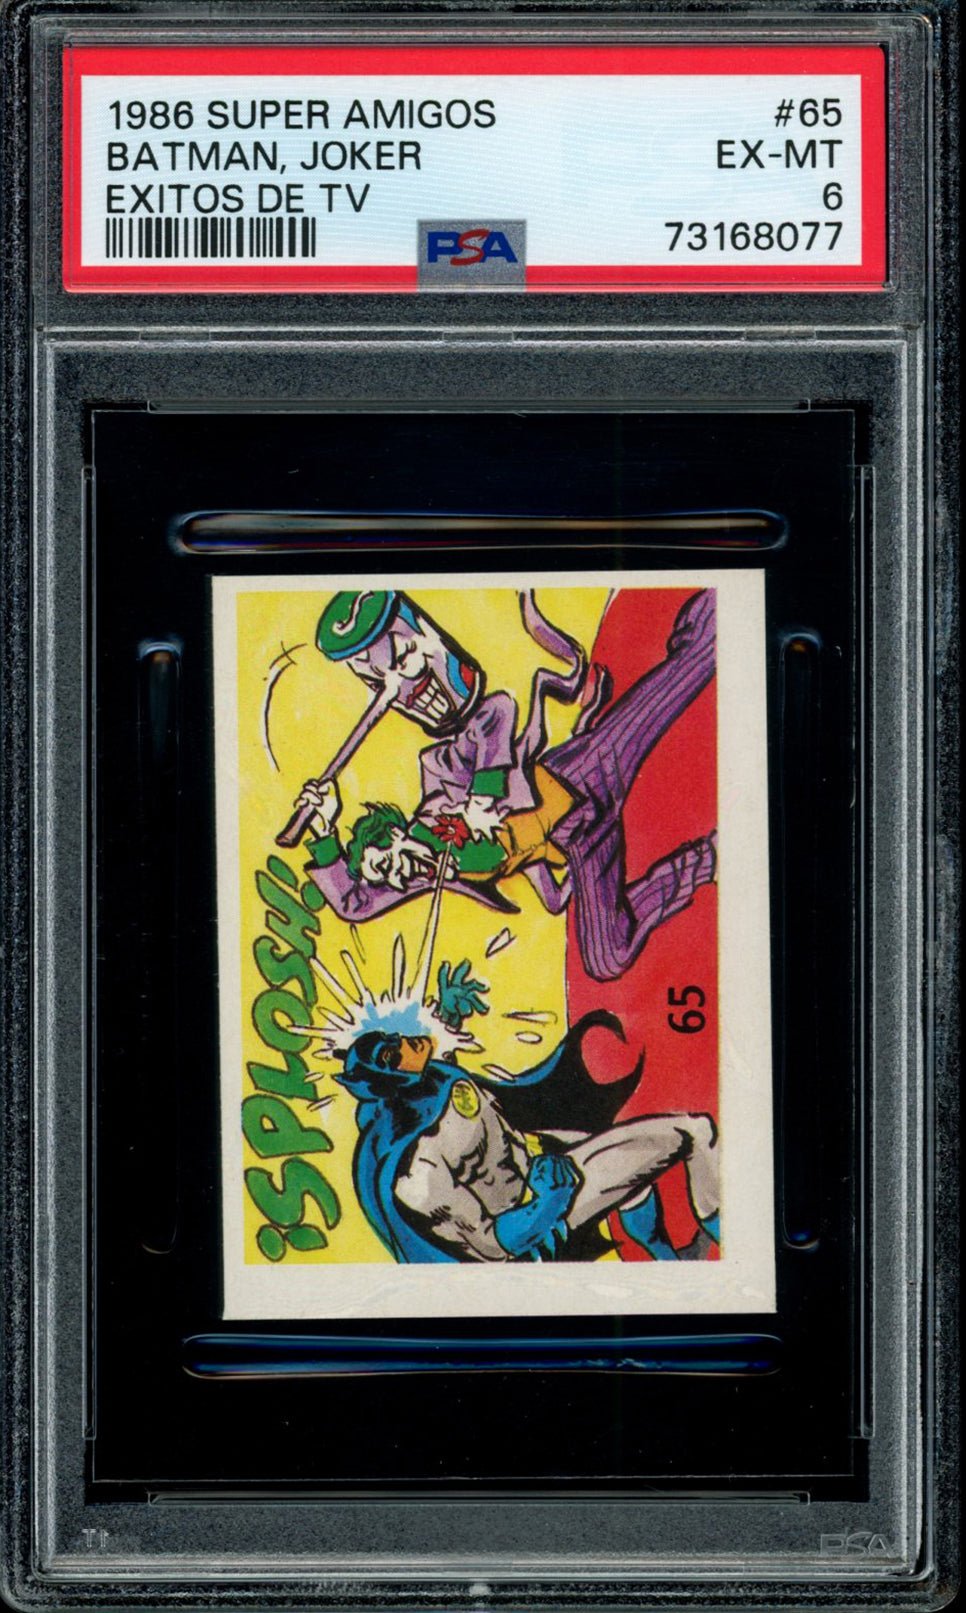 BATMAN & JOKER PSA 6 1986 Reyauca Super Amigos Exitos de TV #65 DC Comics Base Graded Cards - Hobby Gems